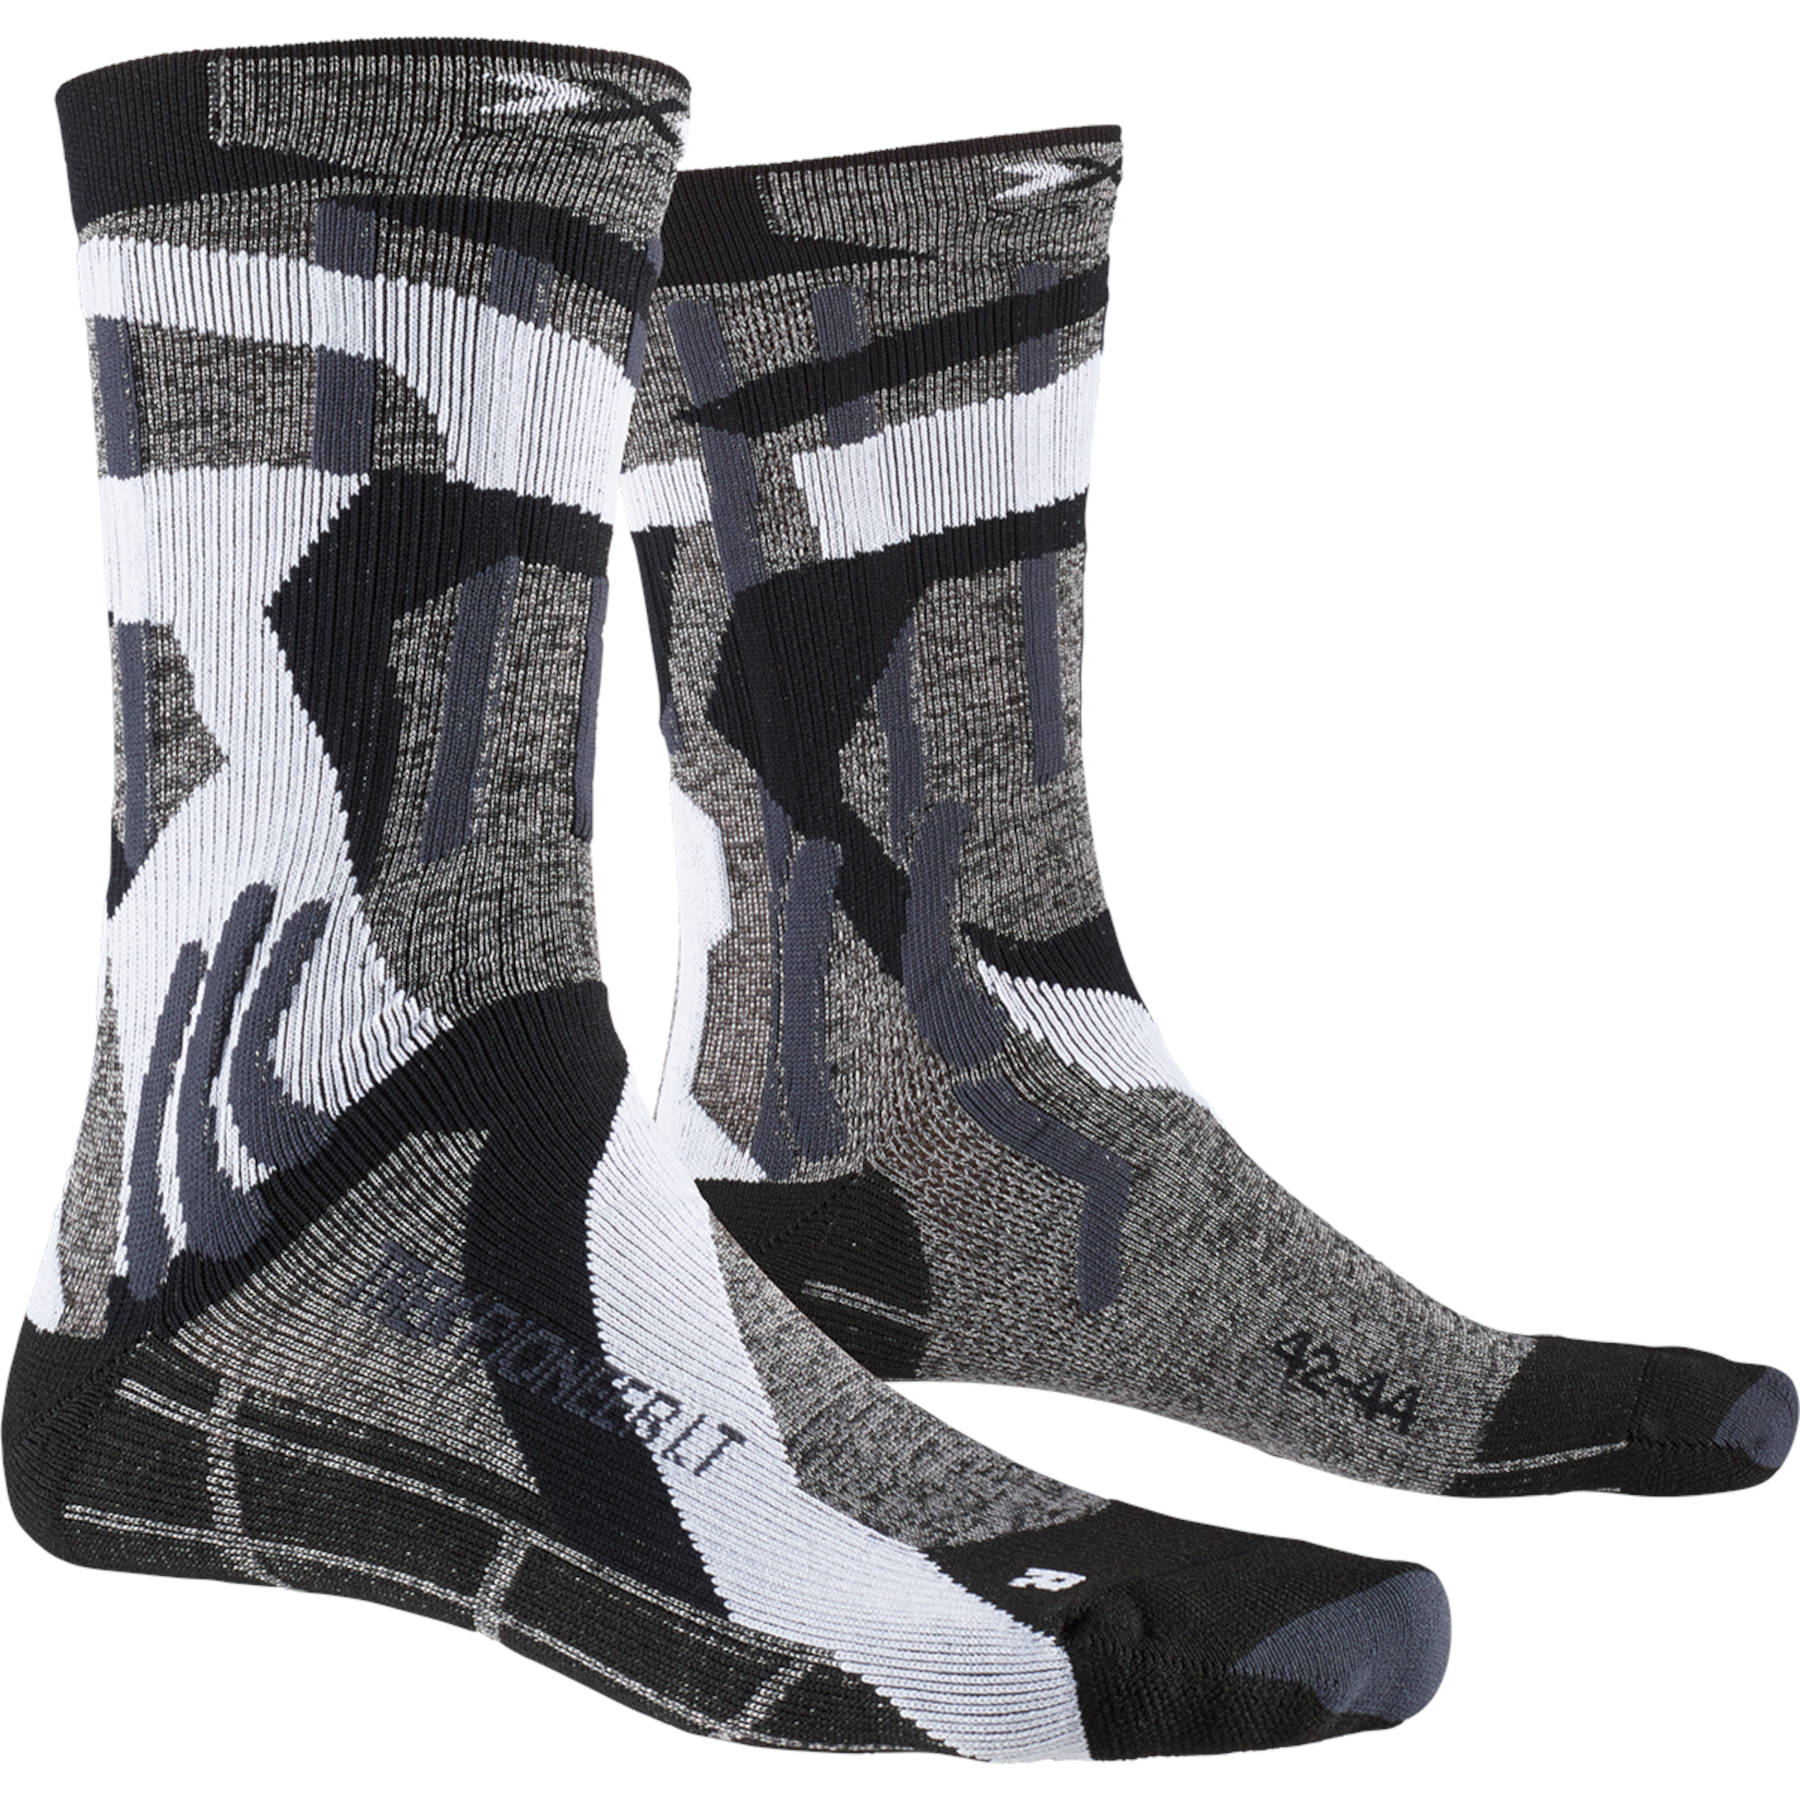 Picture of X-Socks Trek Pioneer LT Socks - granite grey/modern camo